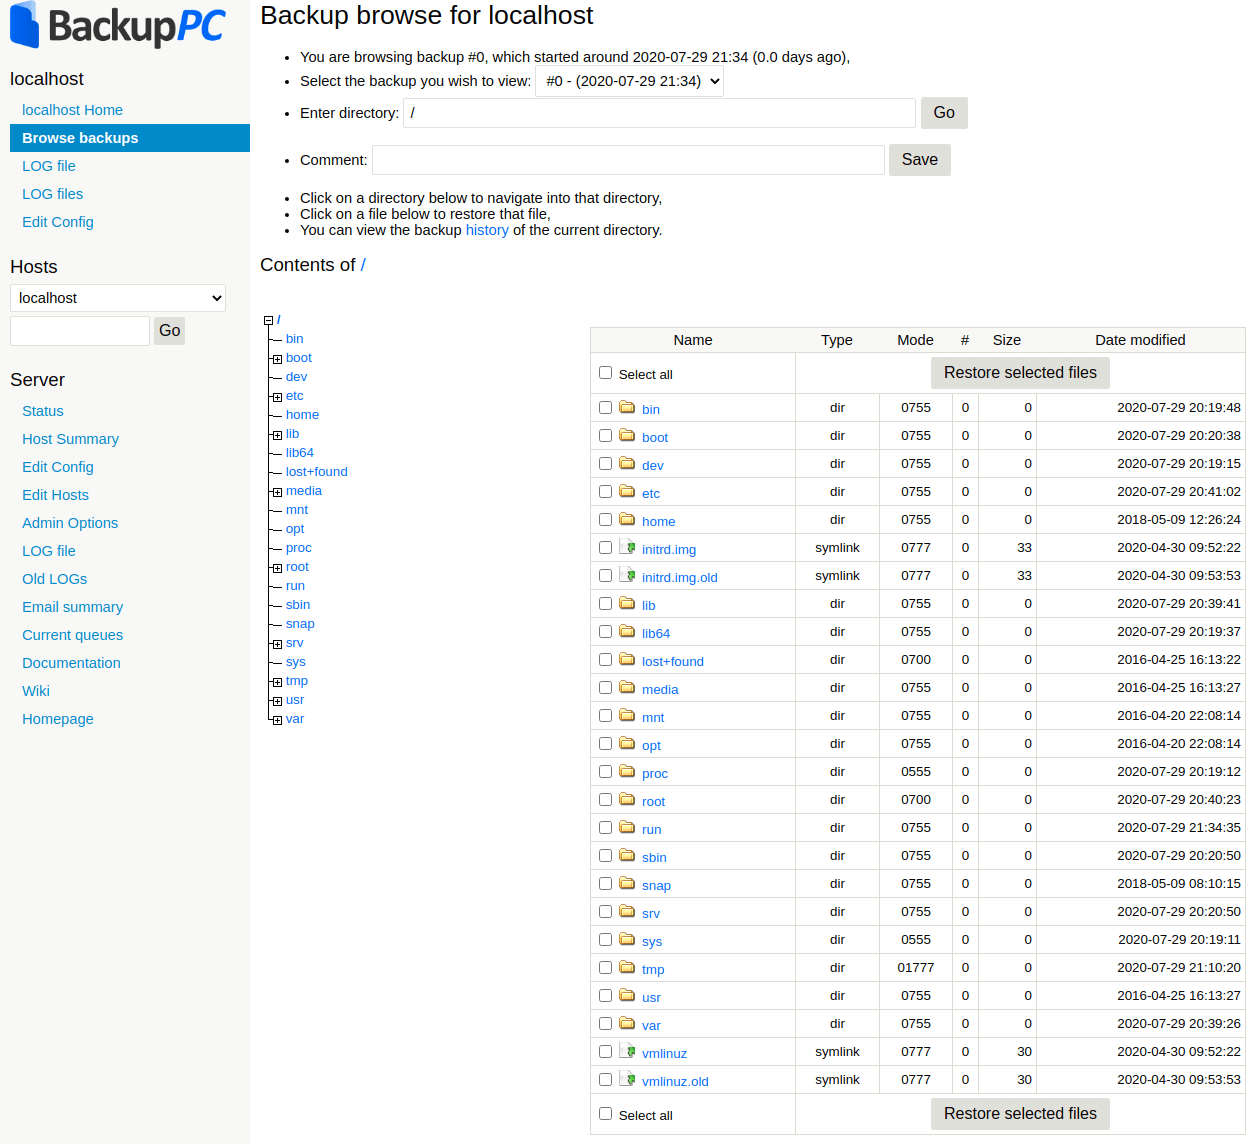 Browsing backup files on BackupPC